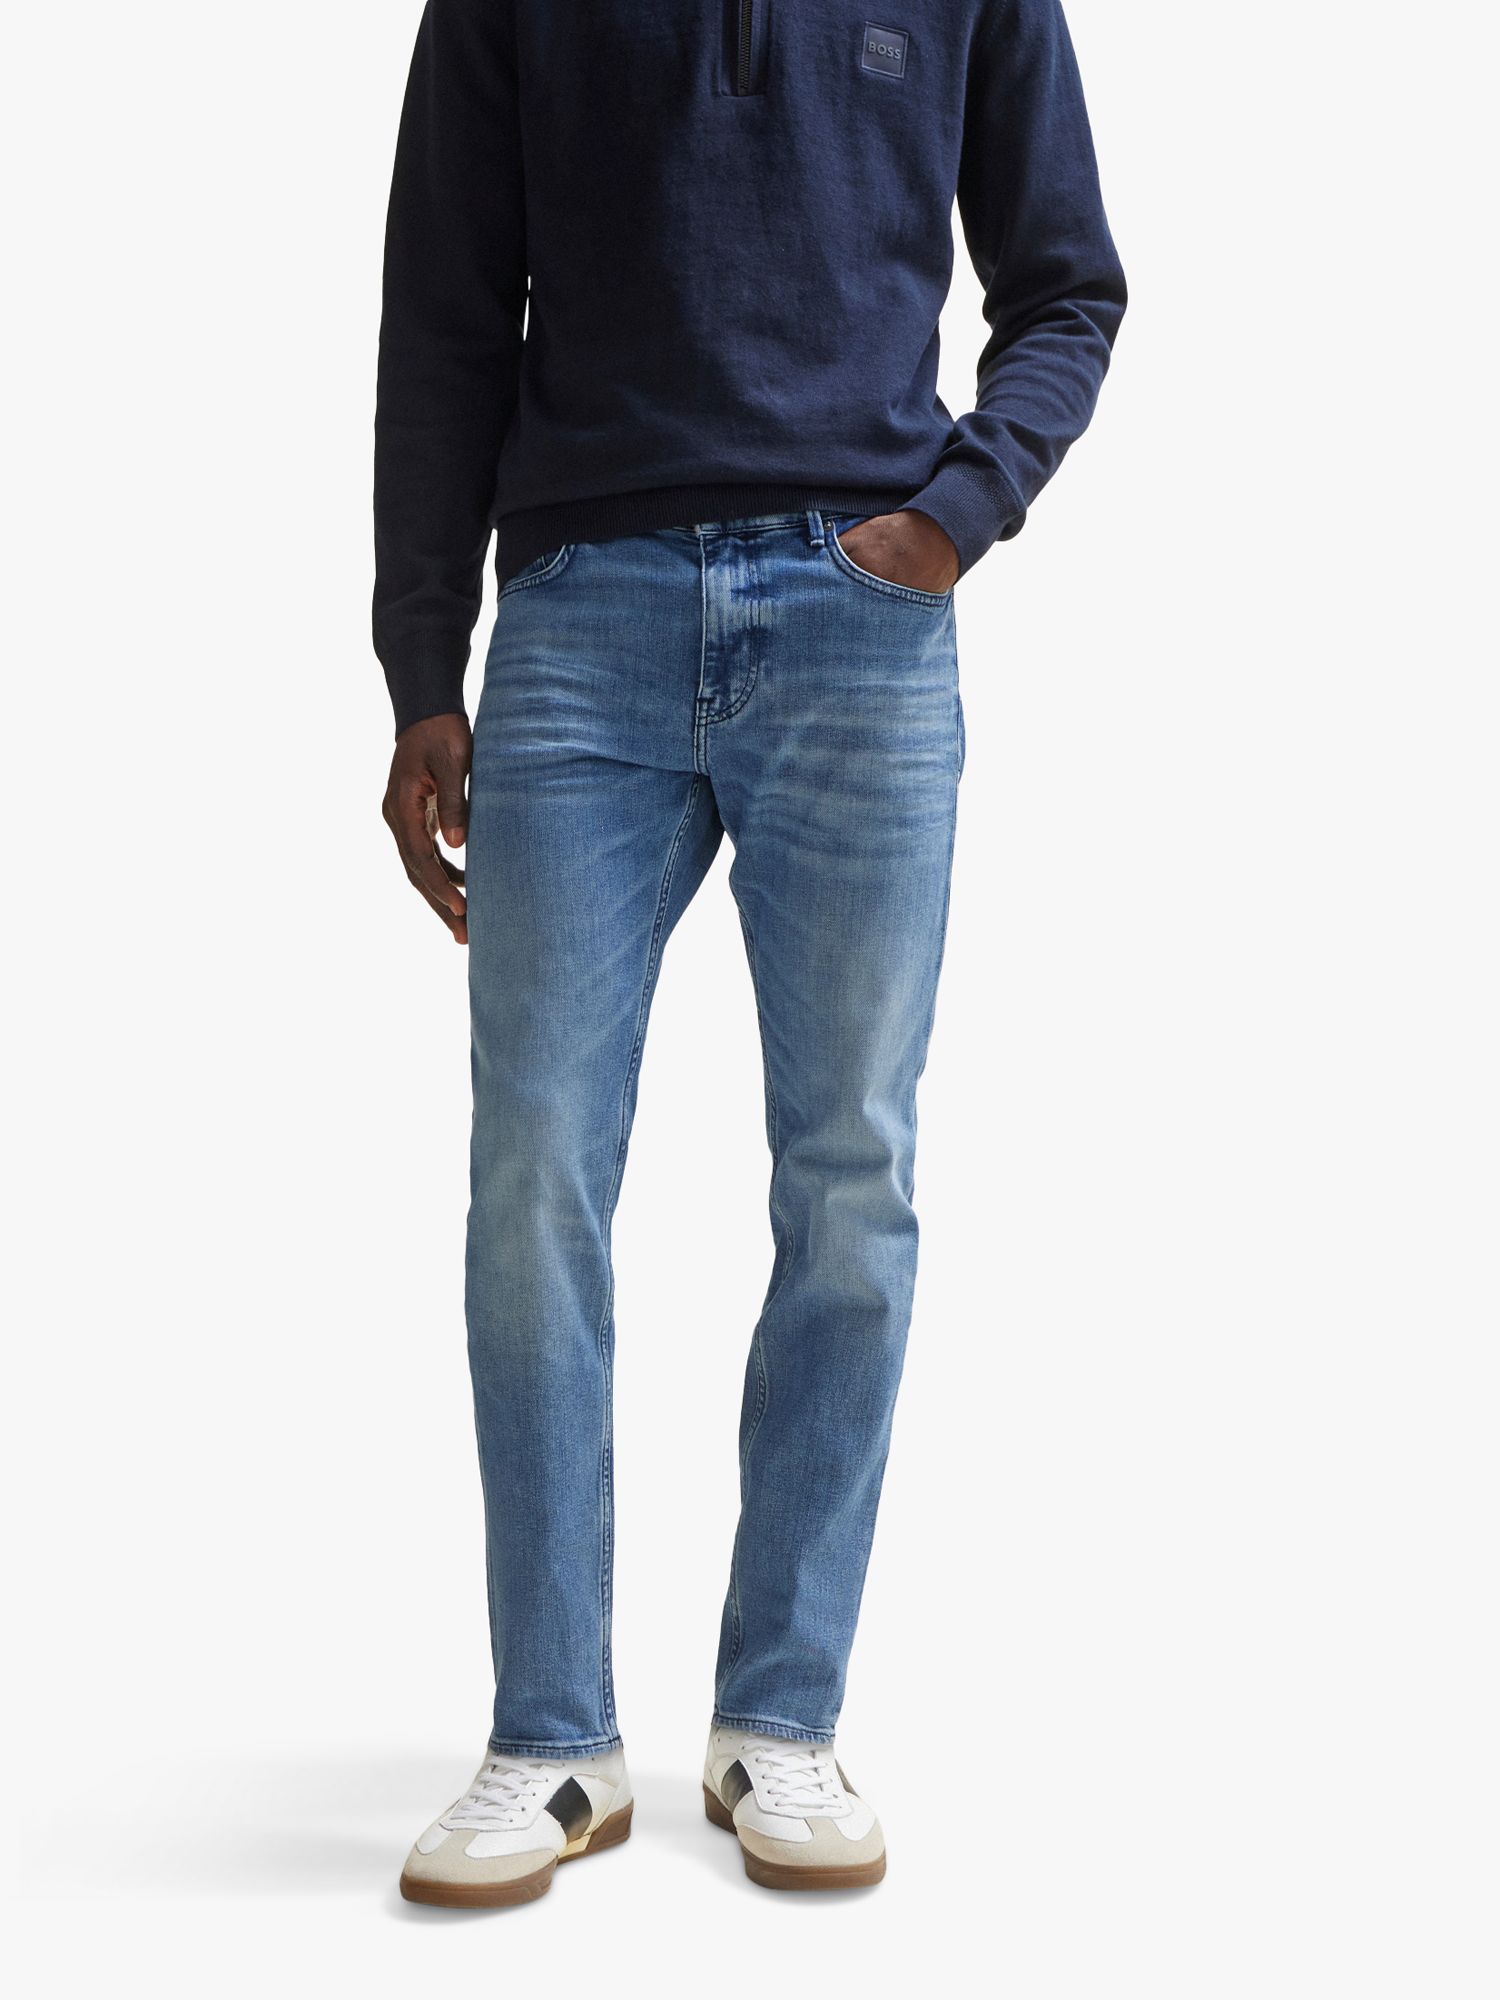 BOSS Delano Slim Fit Jeans, Blue, 30R